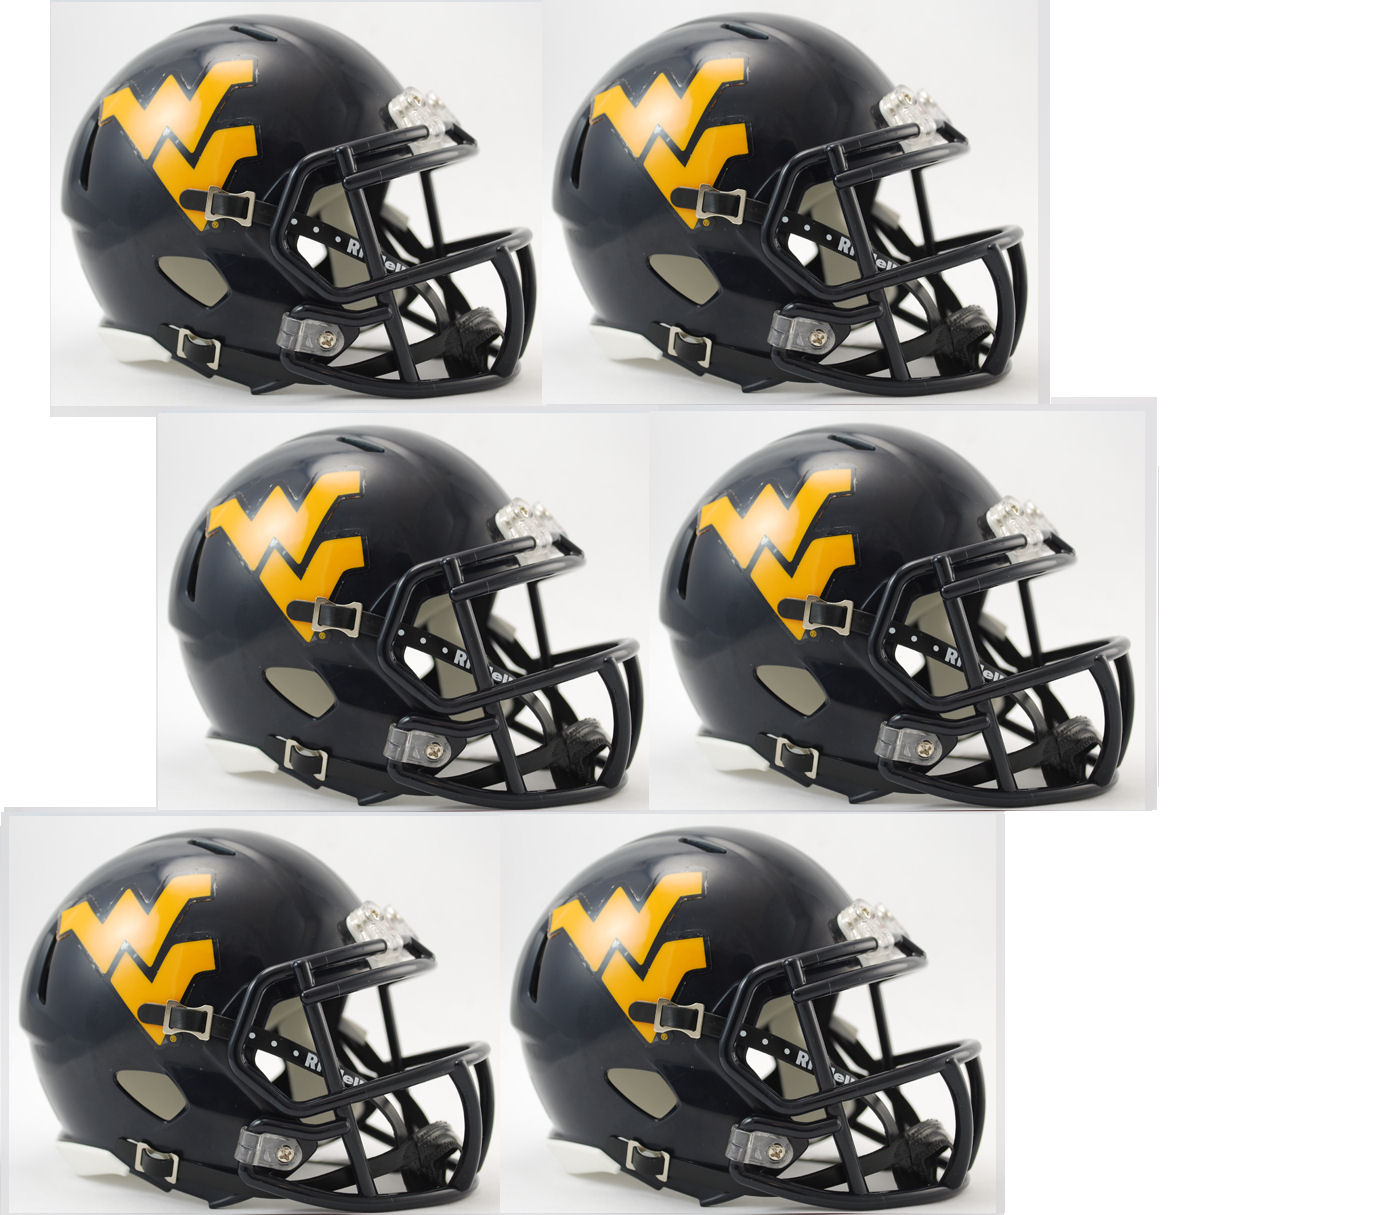 West Virginia Mountaineers NCAA Mini Speed Football Helmet 6 count